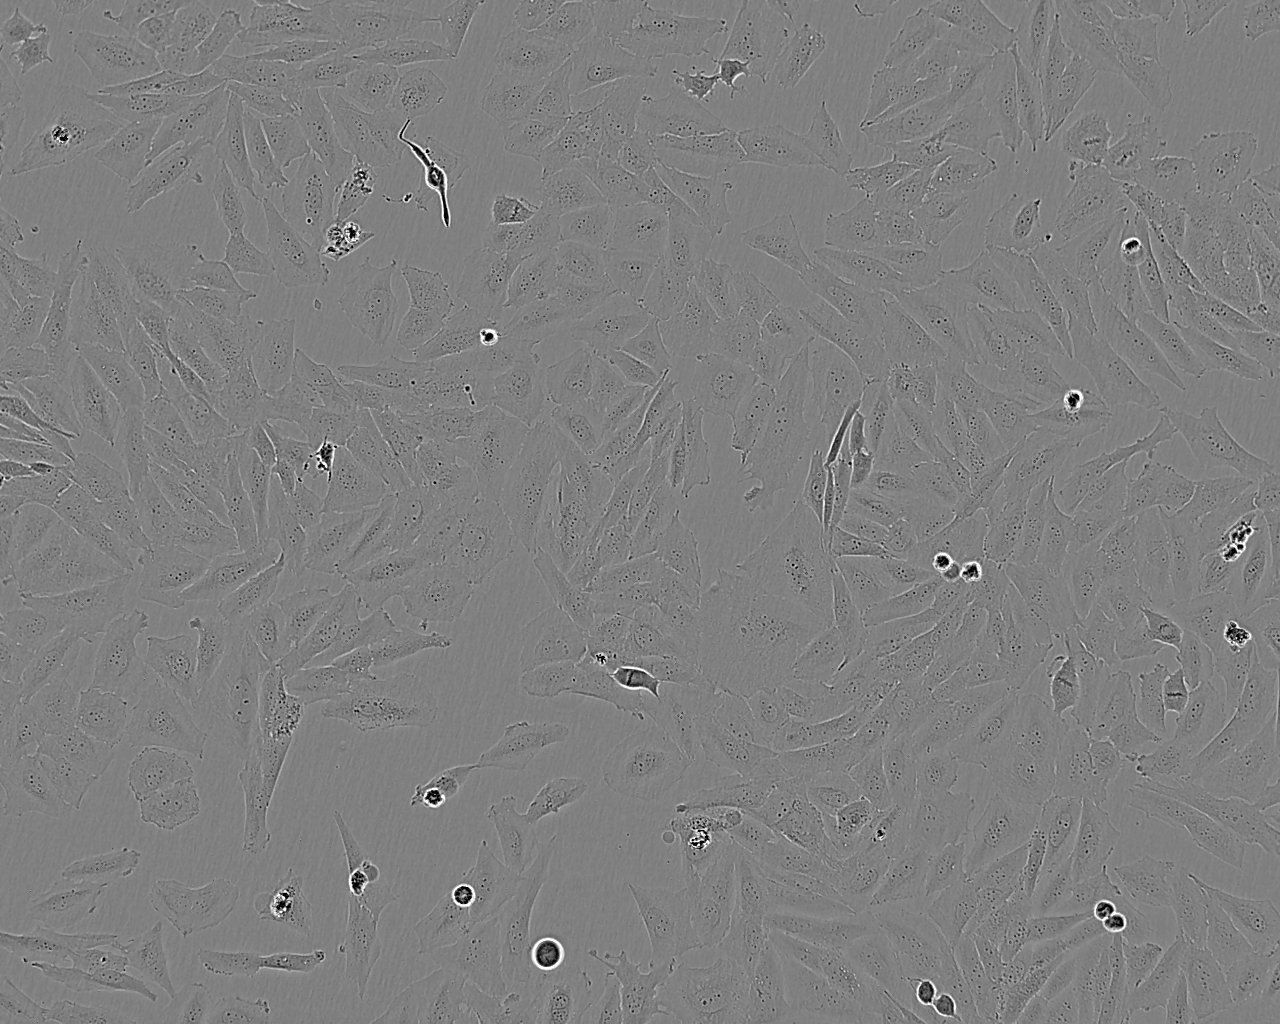 LA-4 [Mouse lung adenoma] epithelioid cells小鼠肺癌细胞系